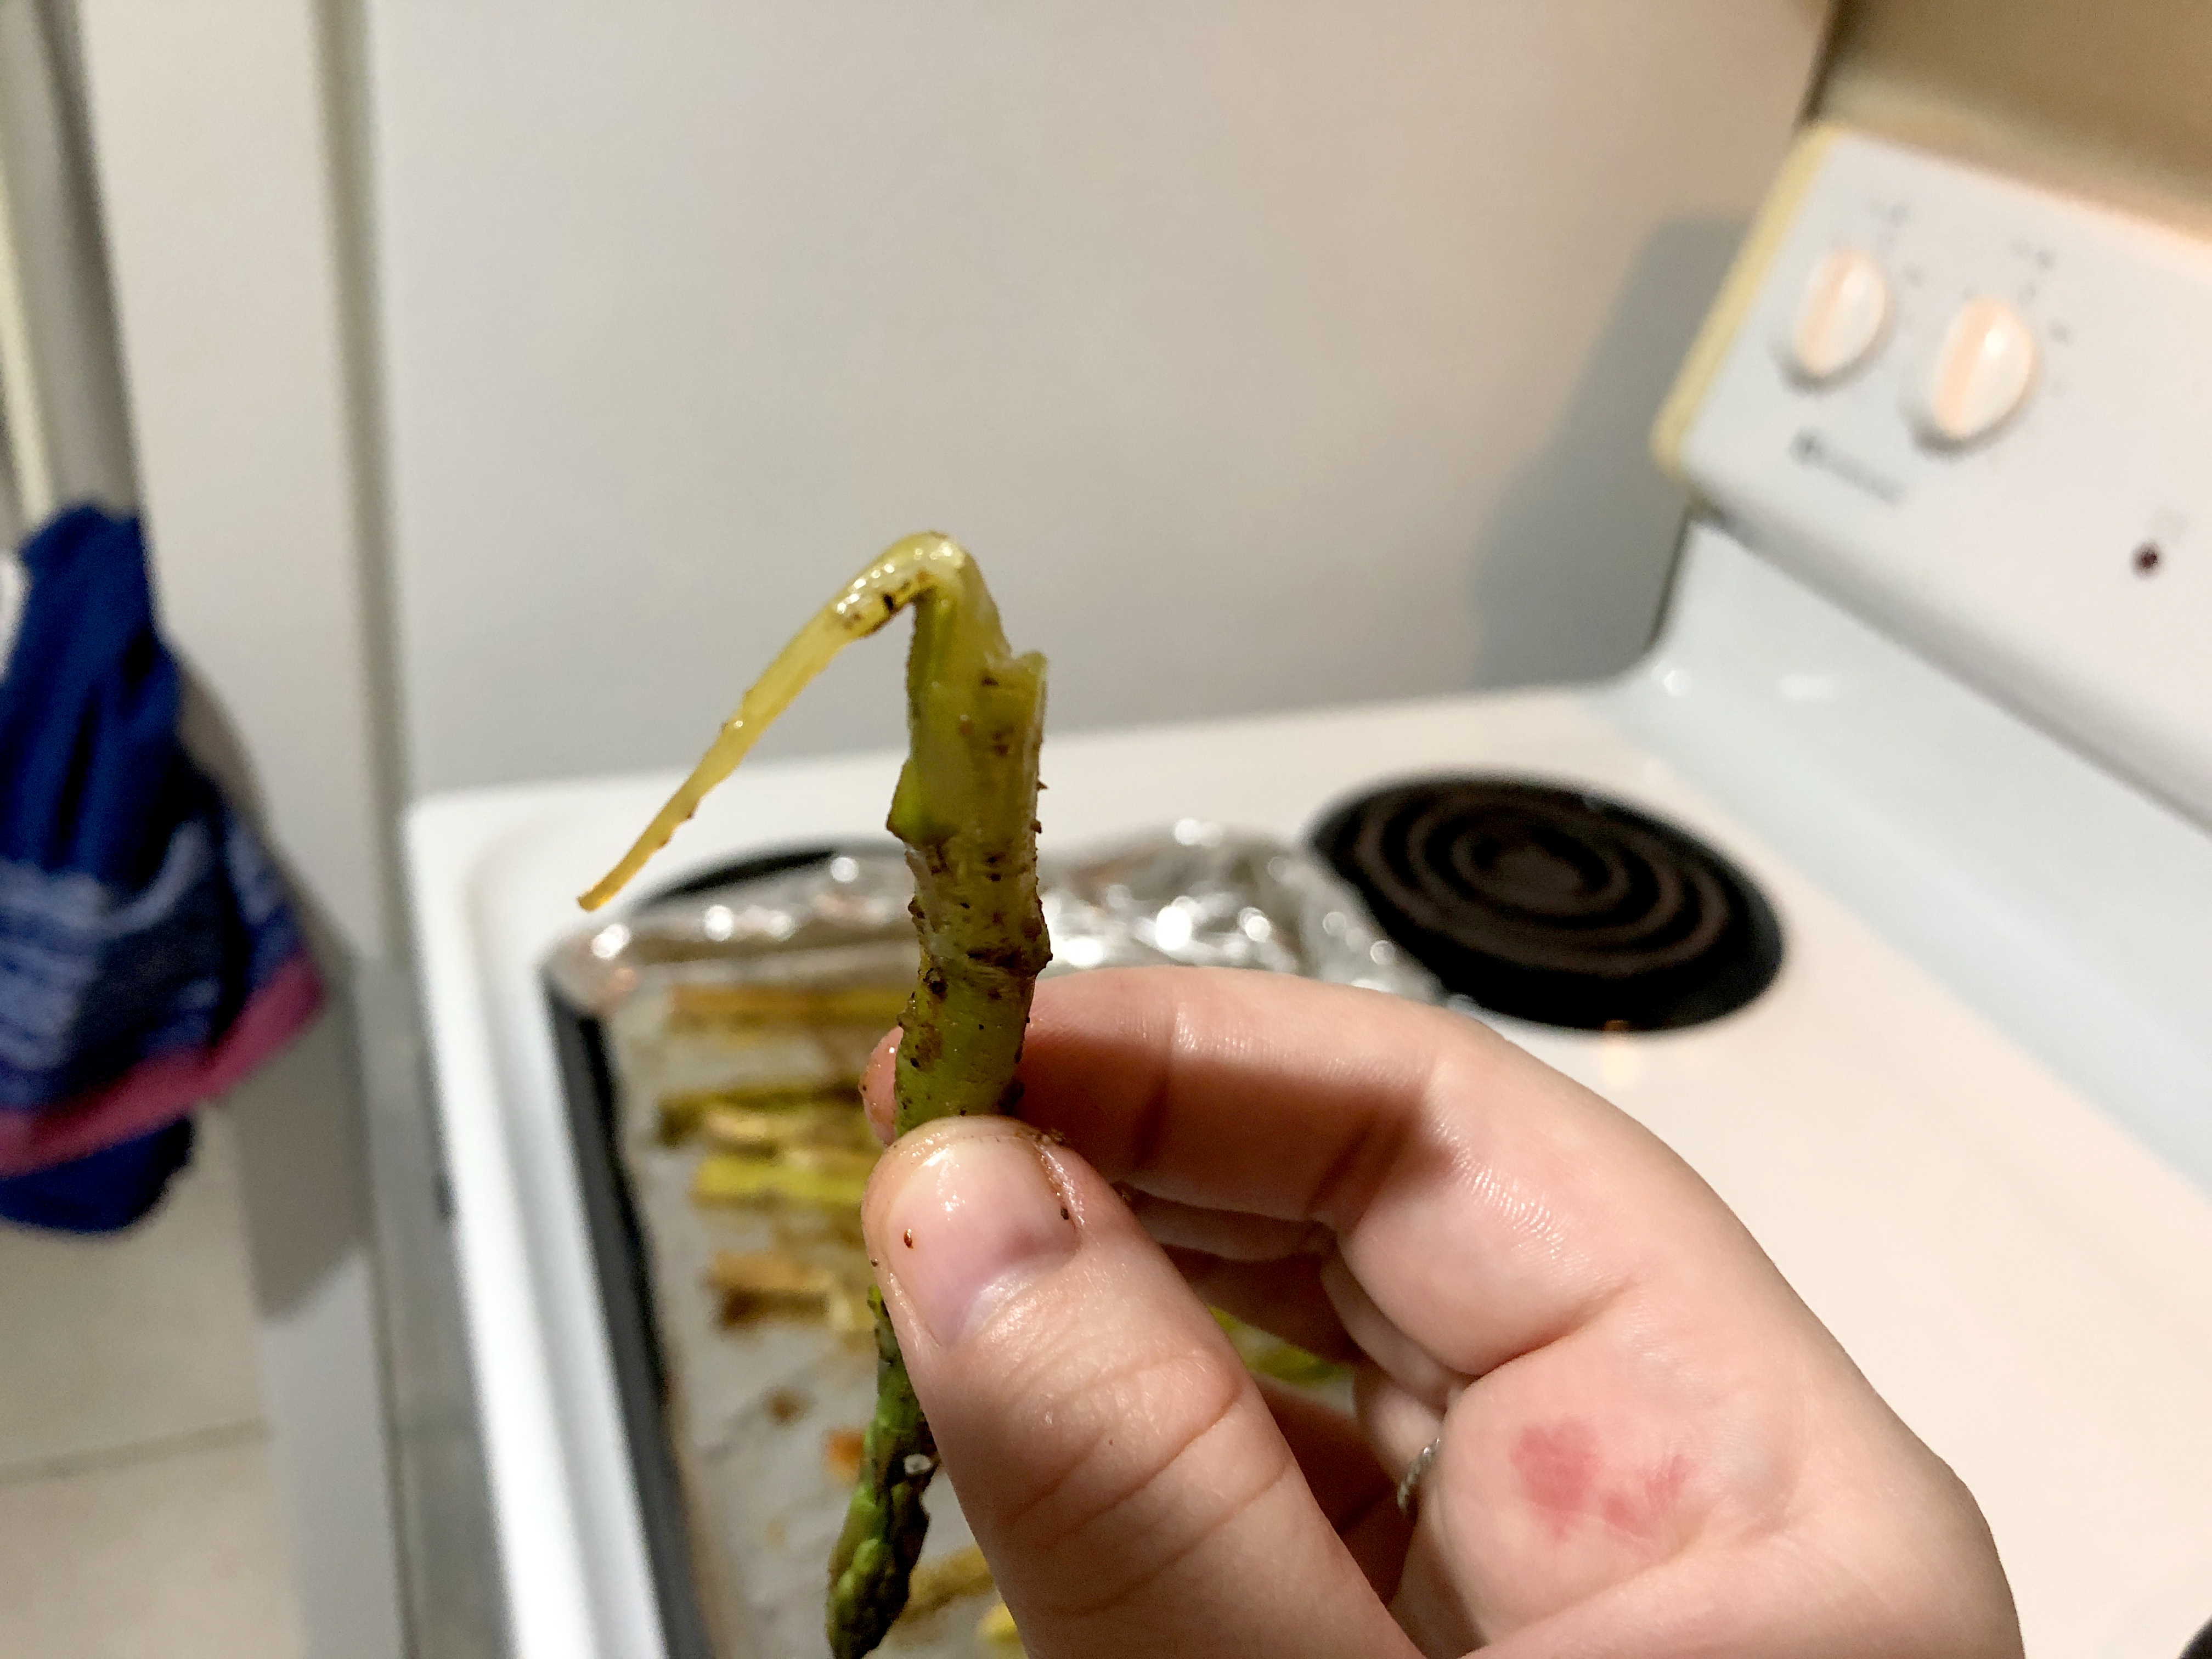 unpeeled asparagus